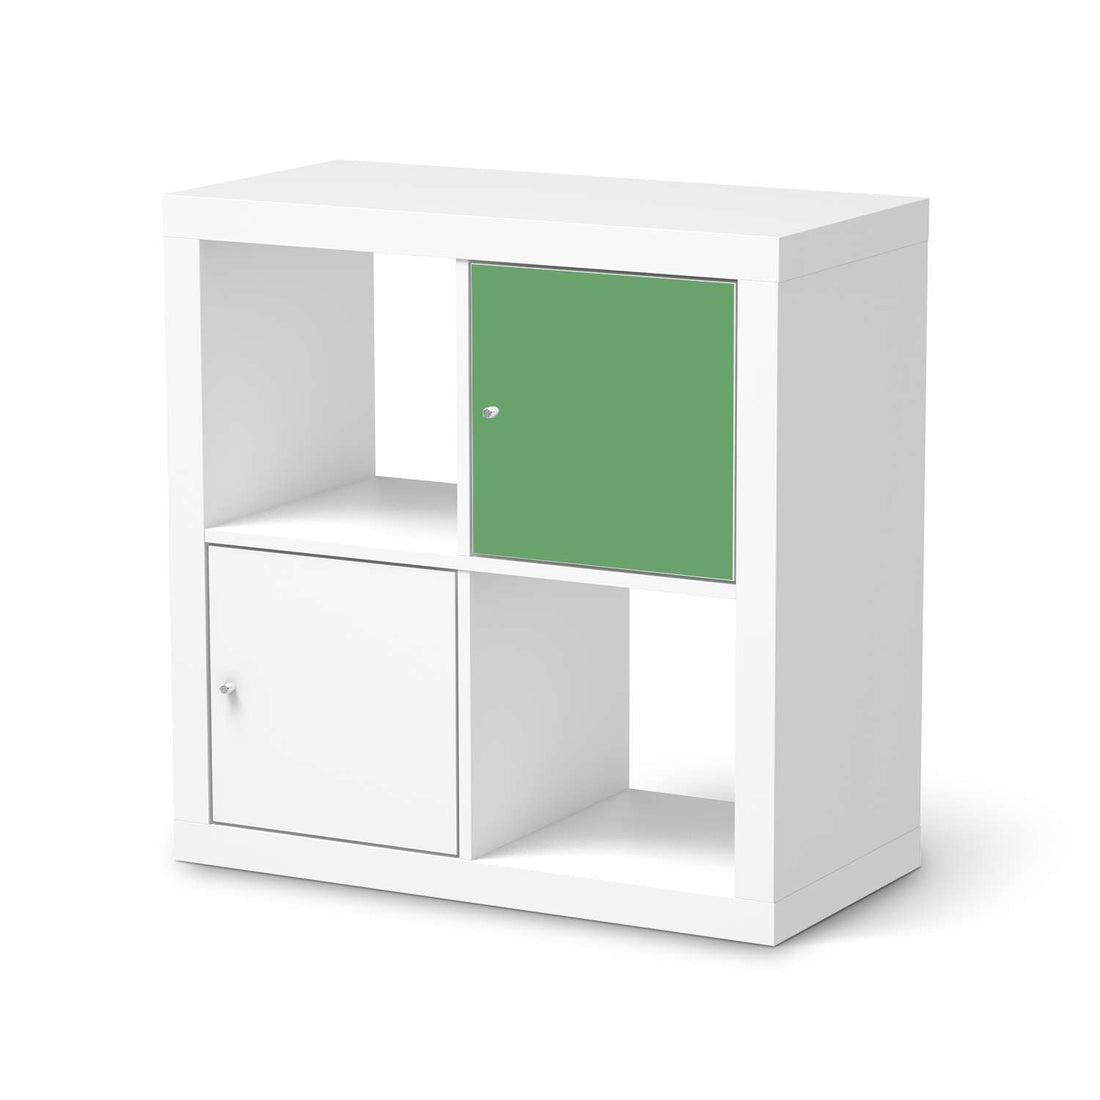 Selbstklebende Folie Grün Light - IKEA Kallax Regal 1 Türe  - weiss